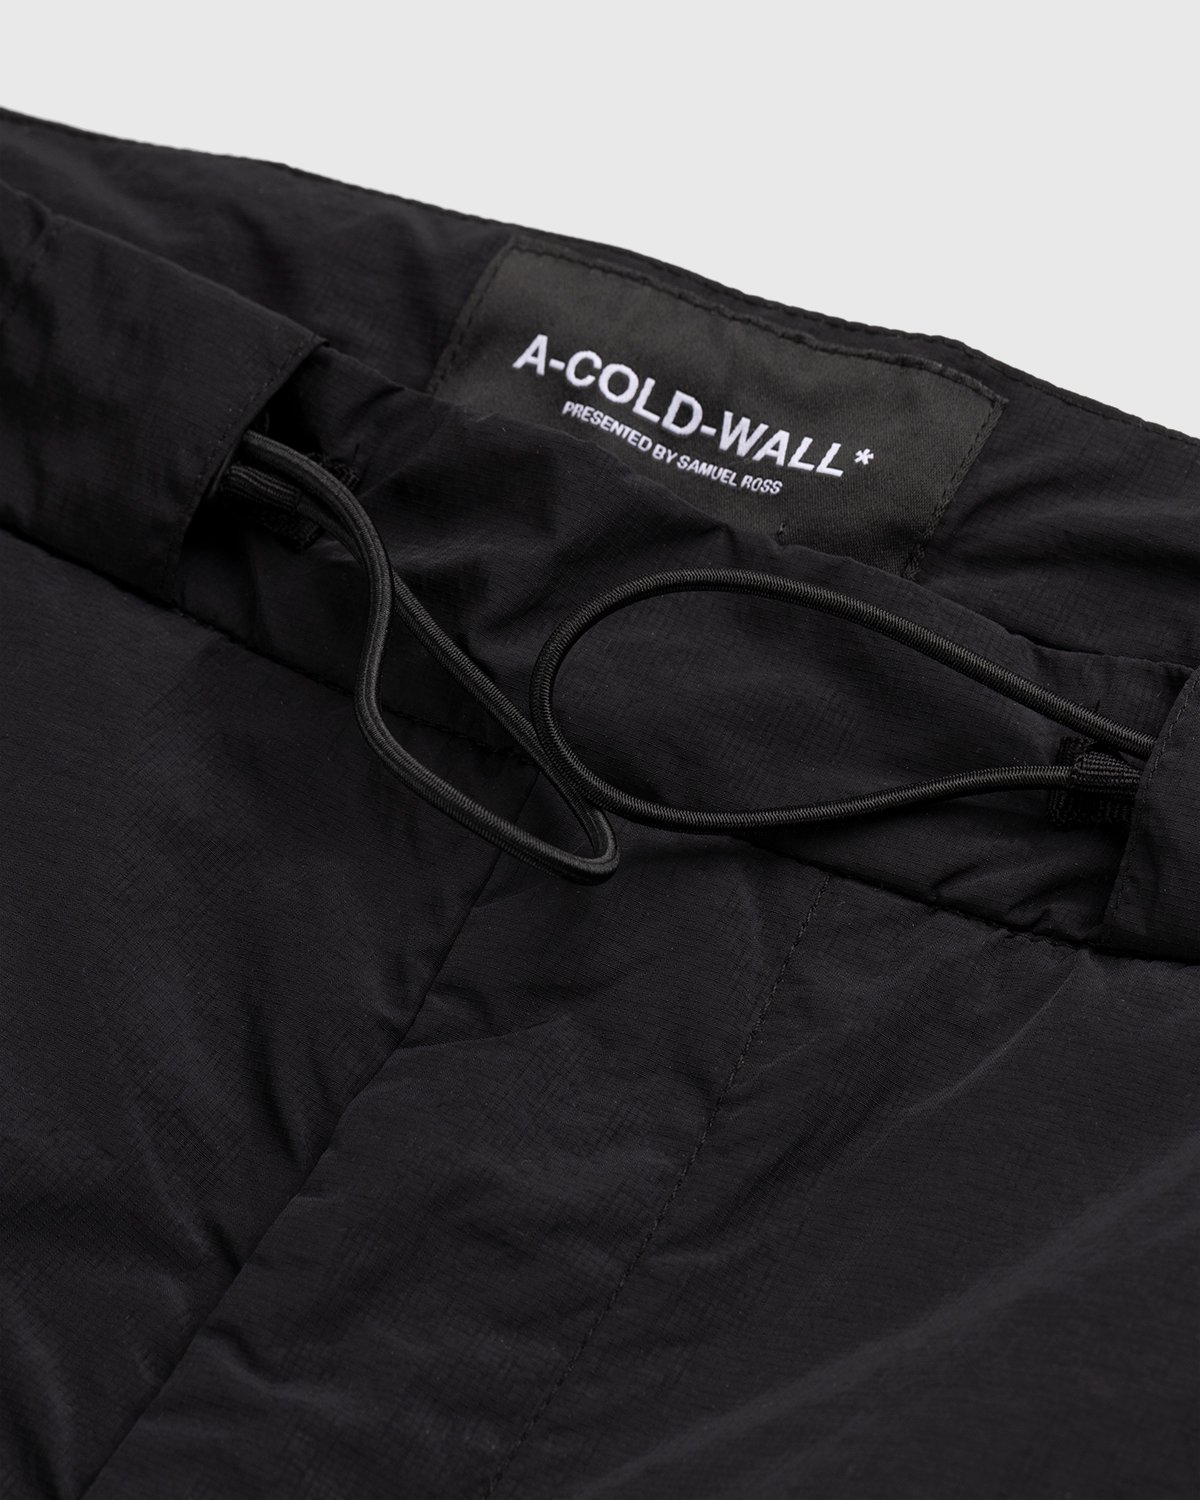 A-Cold-Wall* - Portage Pant Black - Clothing - Black - Image 8